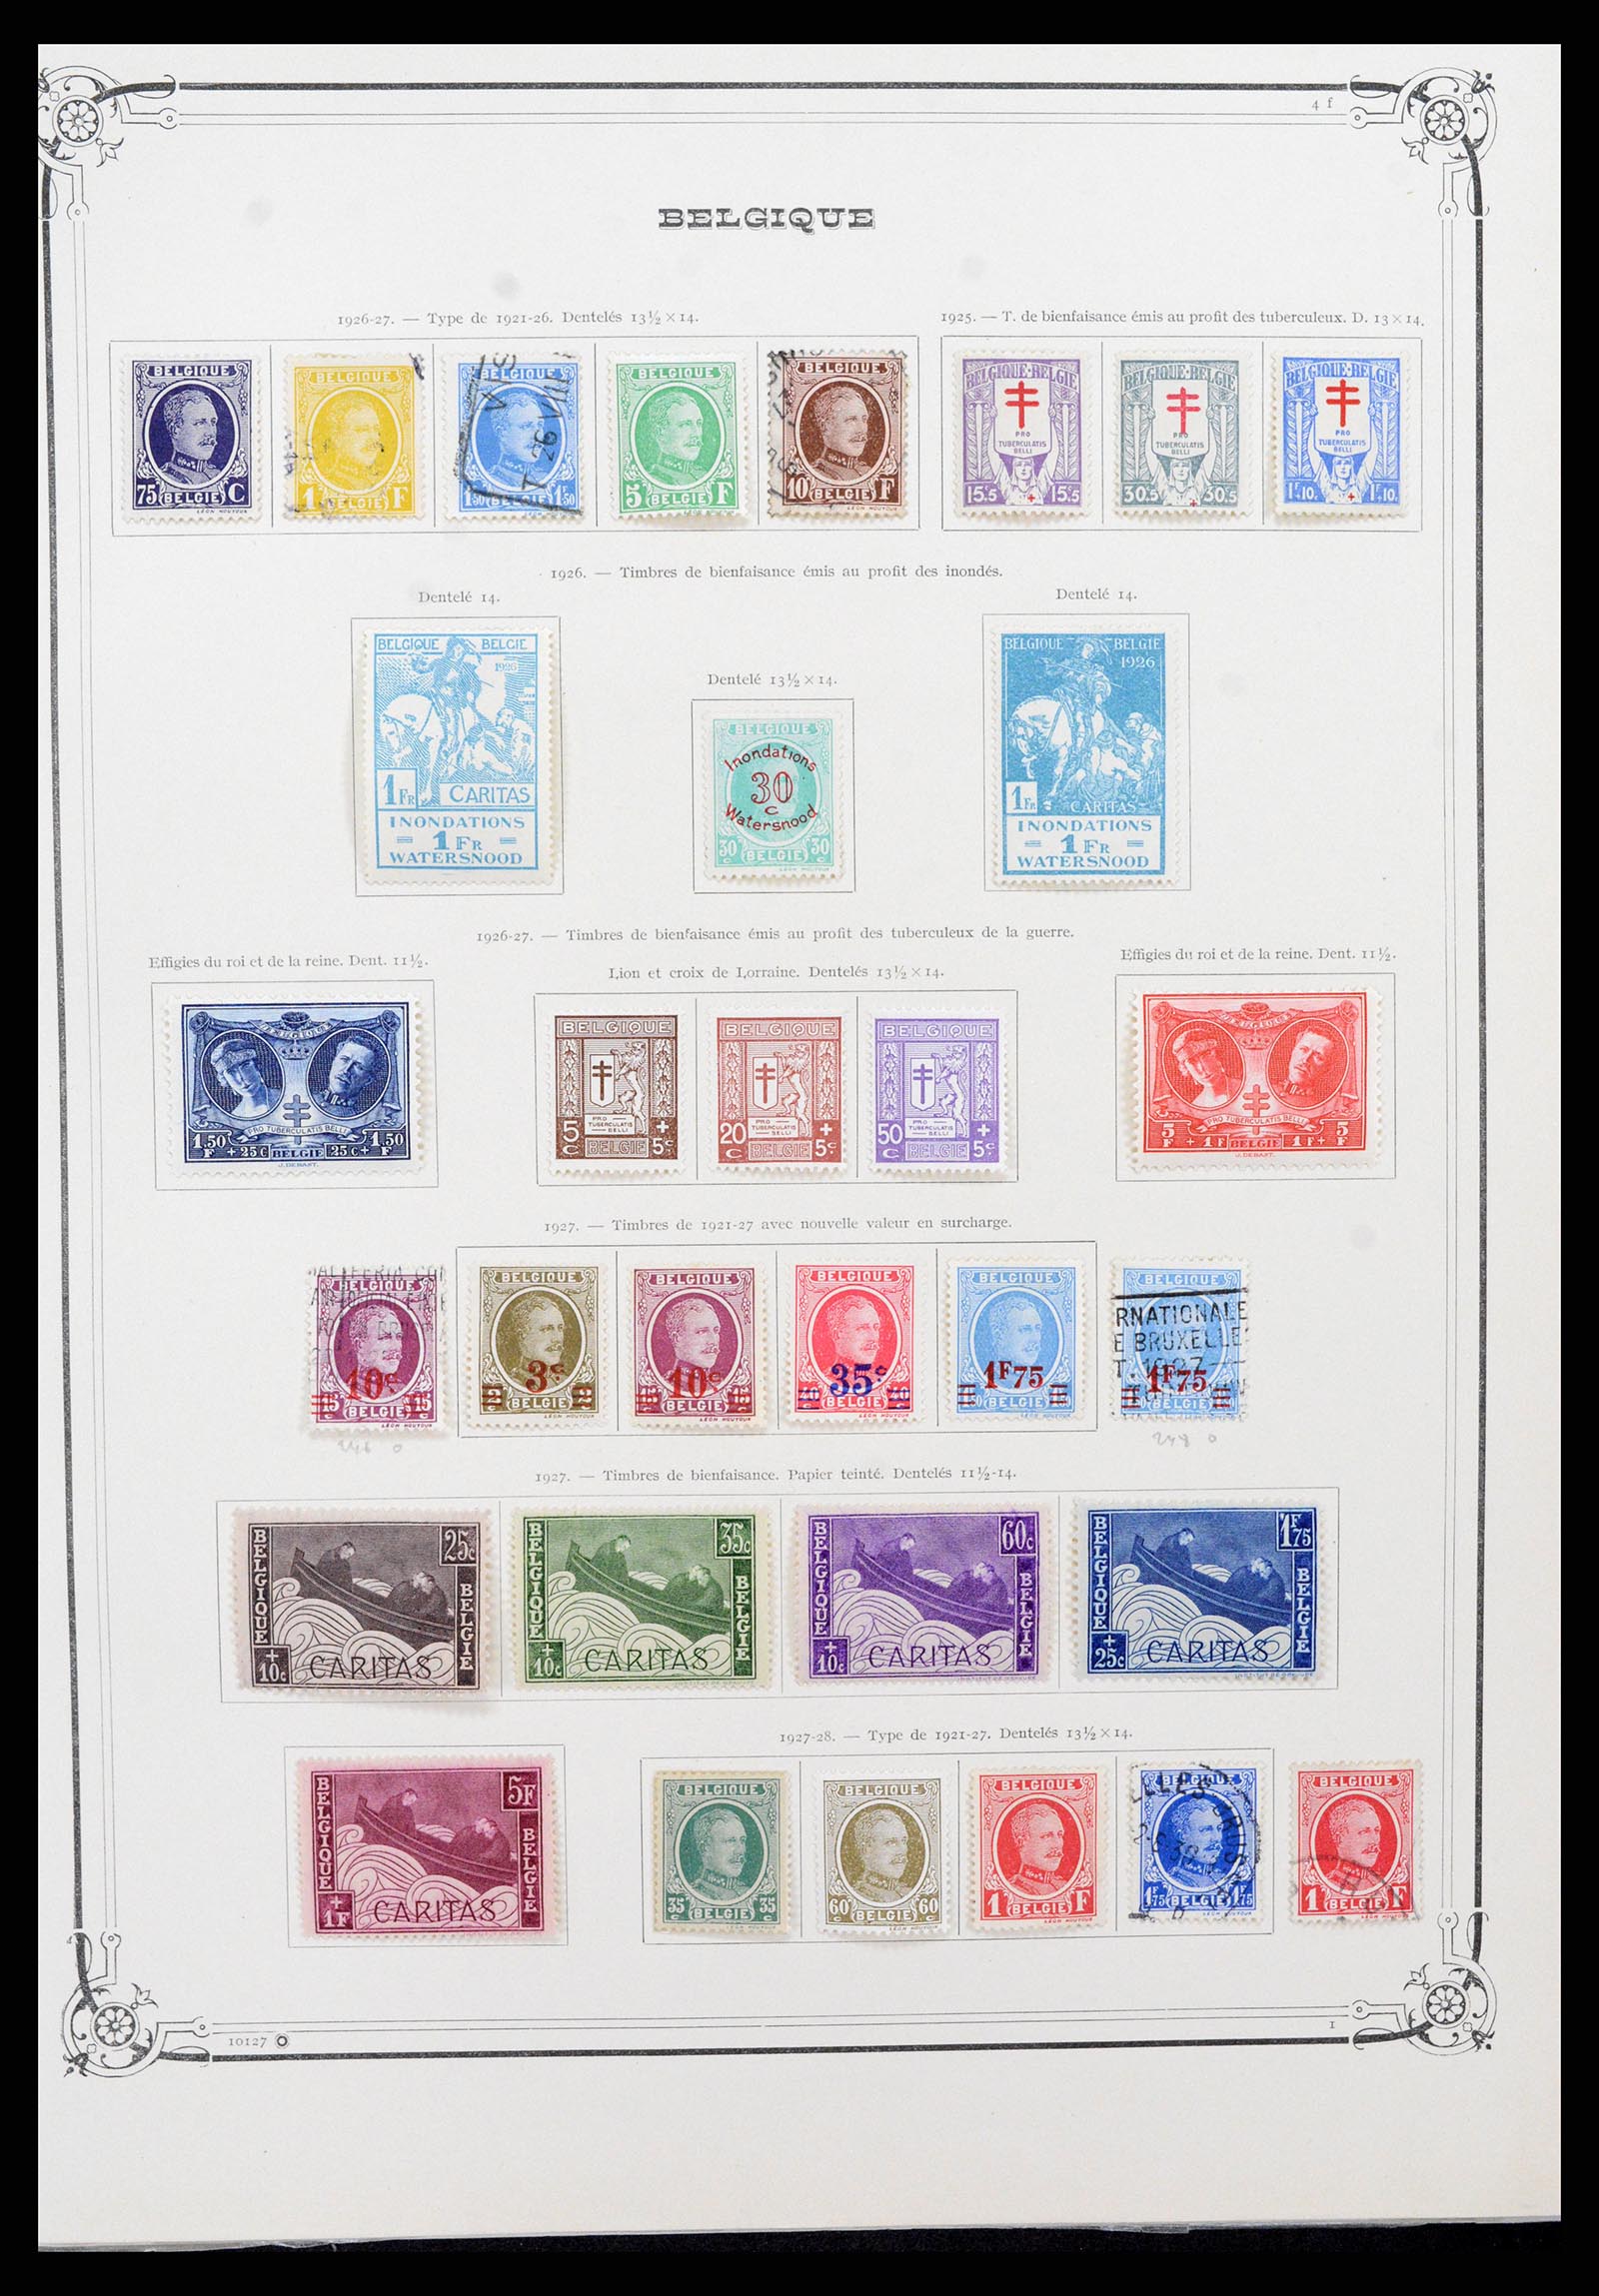 37538 011 - Stamp collection 37538 Belgium 1849-1941.